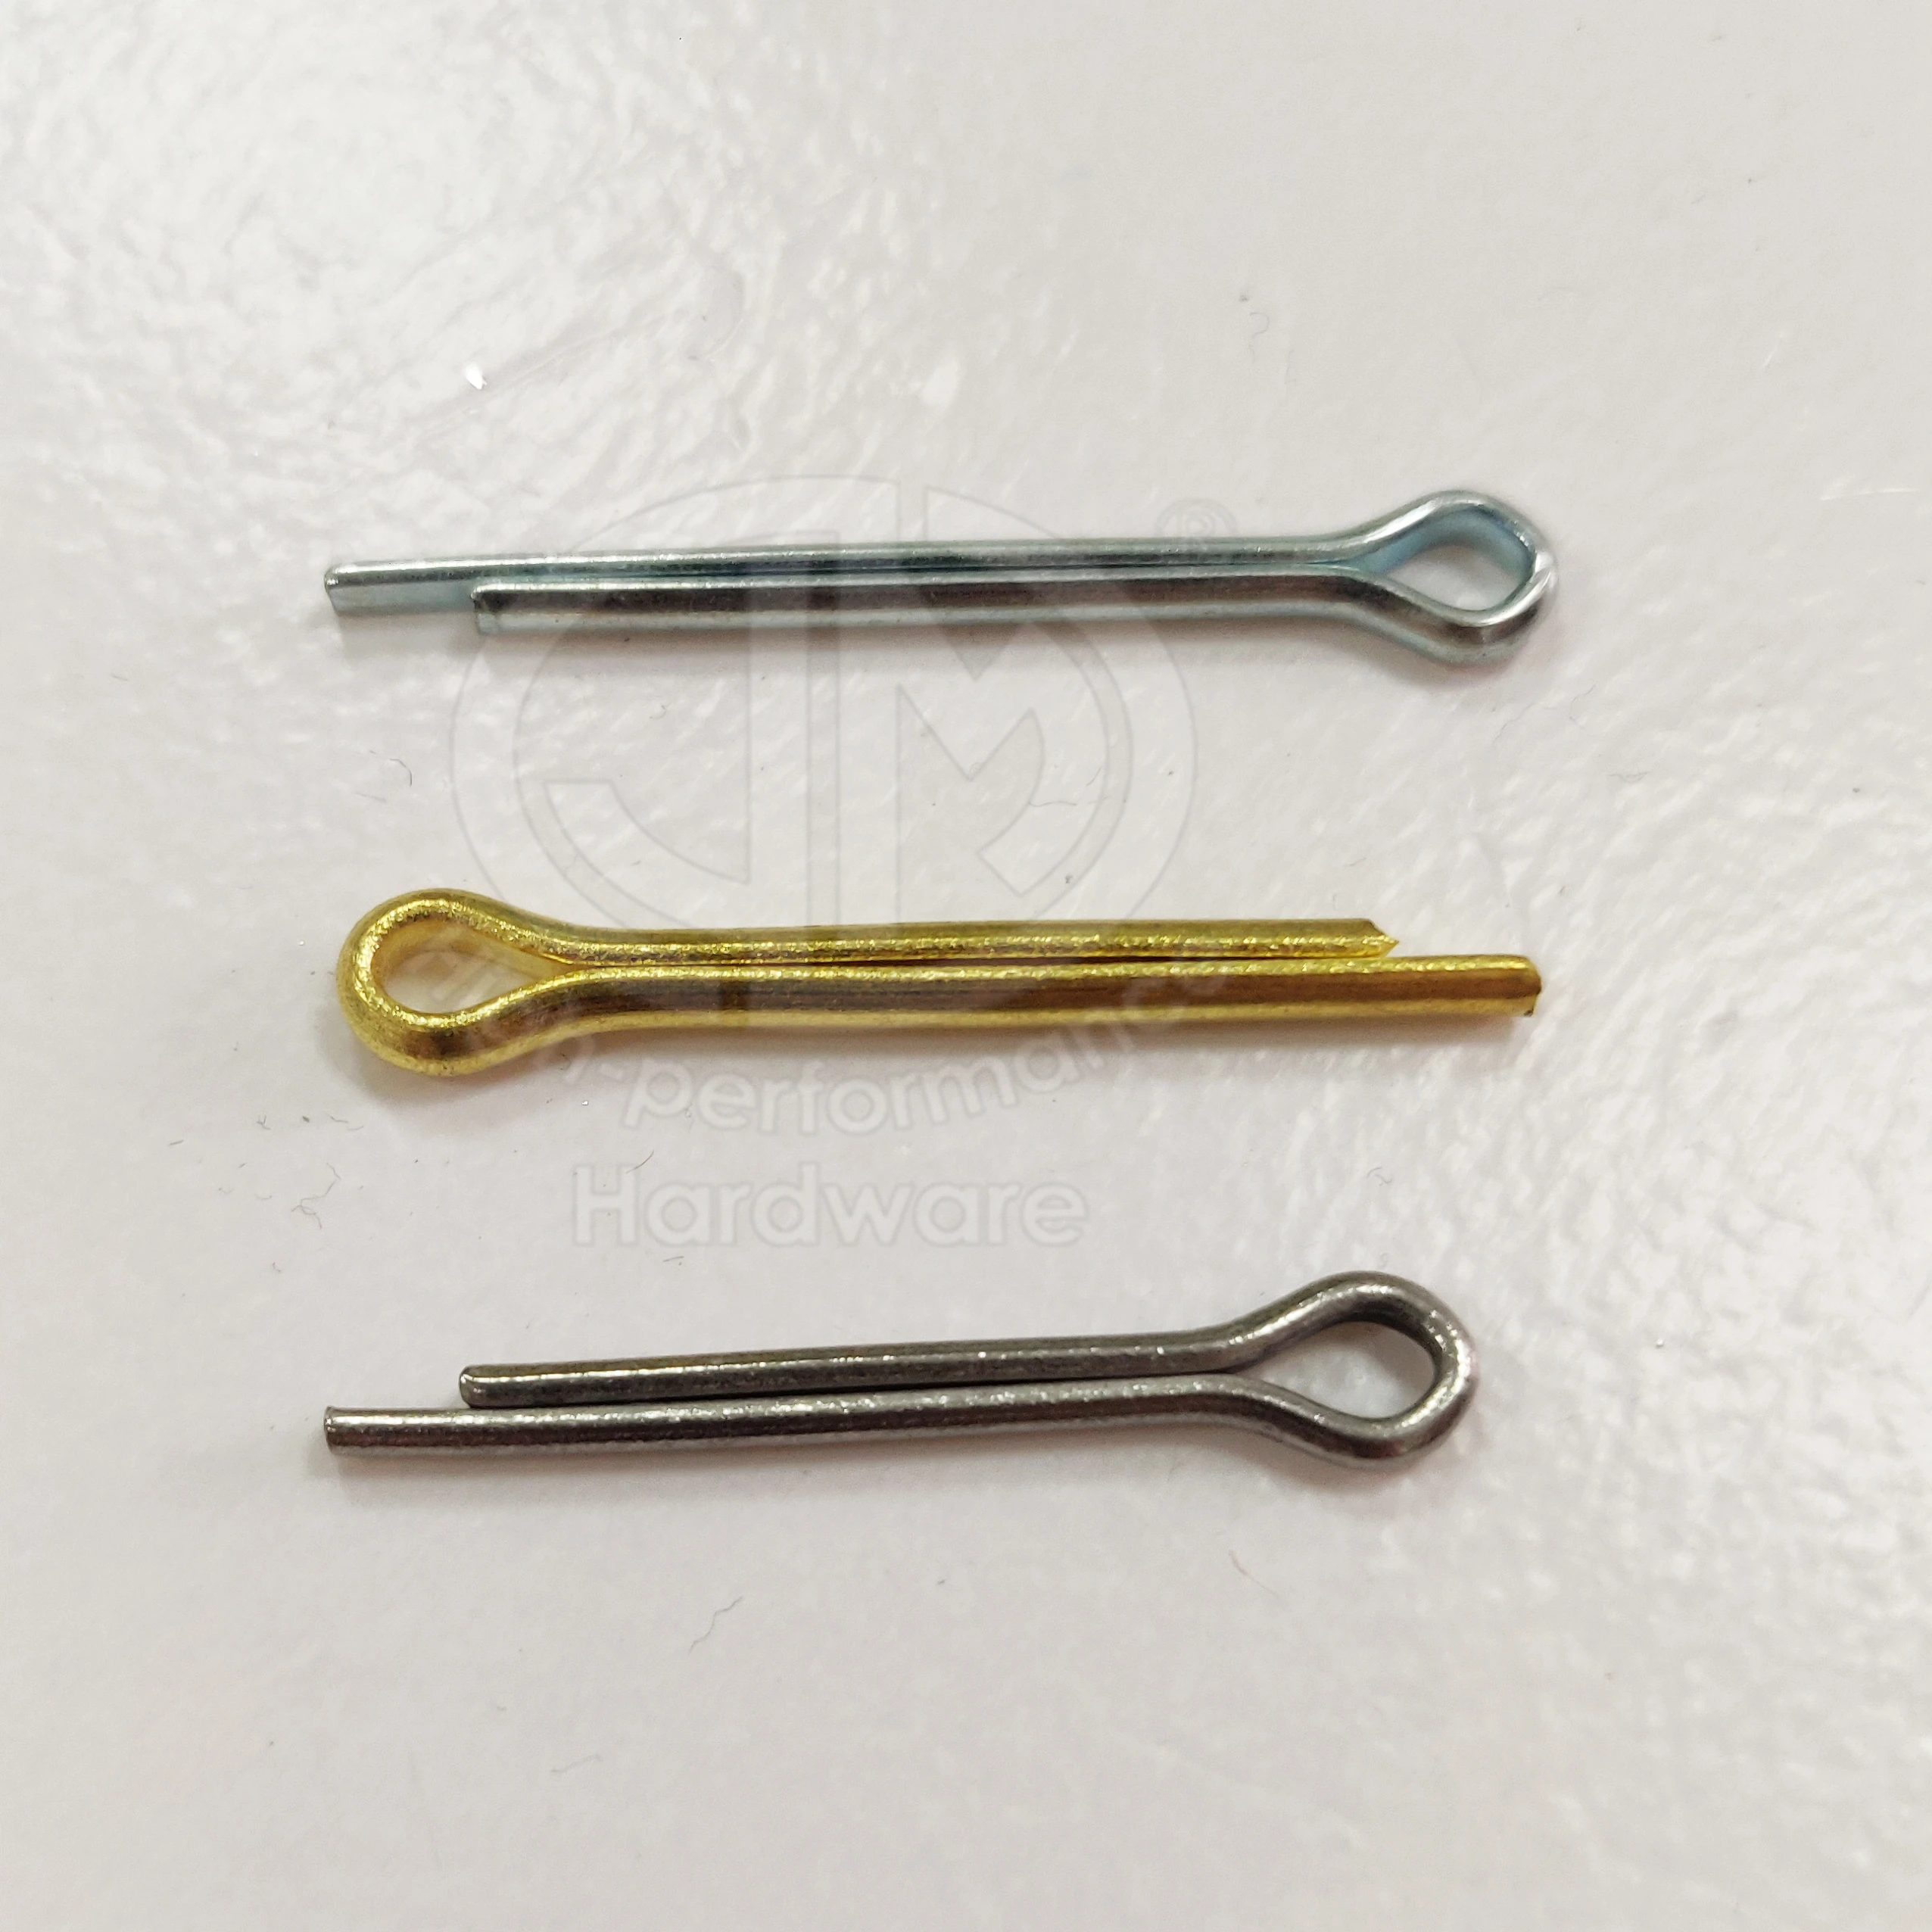 3mm X 60mm Carbon Steel R Shaped Spring Cotter Clip Pin Fastener Hardware 20pcs for sale online 